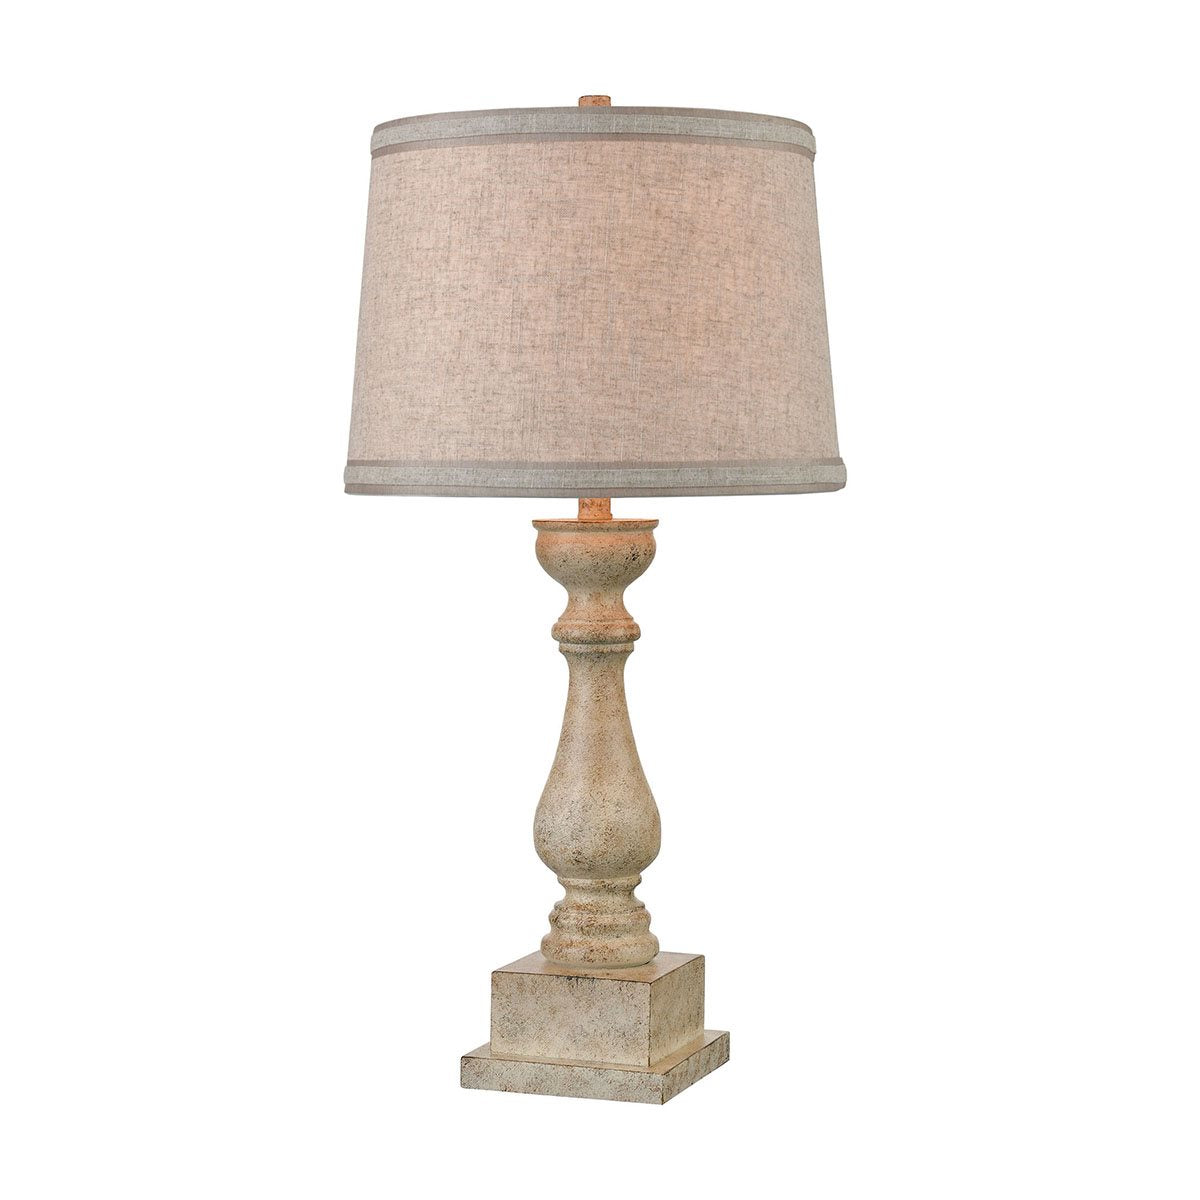 Stein World Kingsley Table Lamp 77140